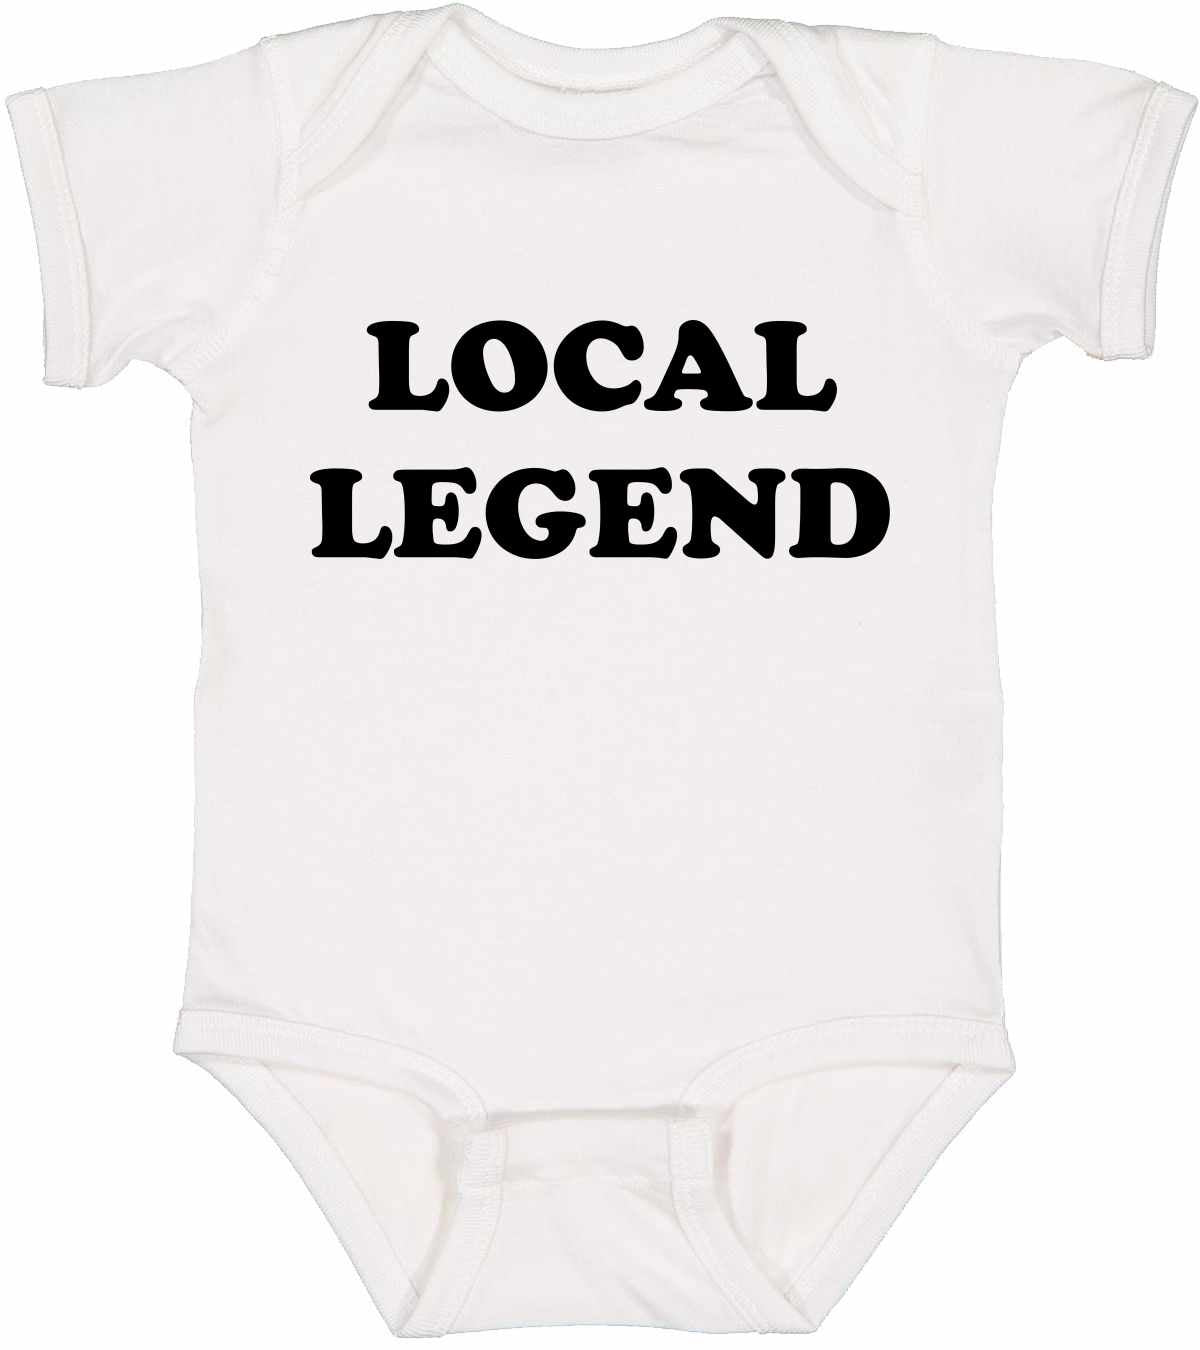 Local Legend on Infant BodySuit (#1196-10)